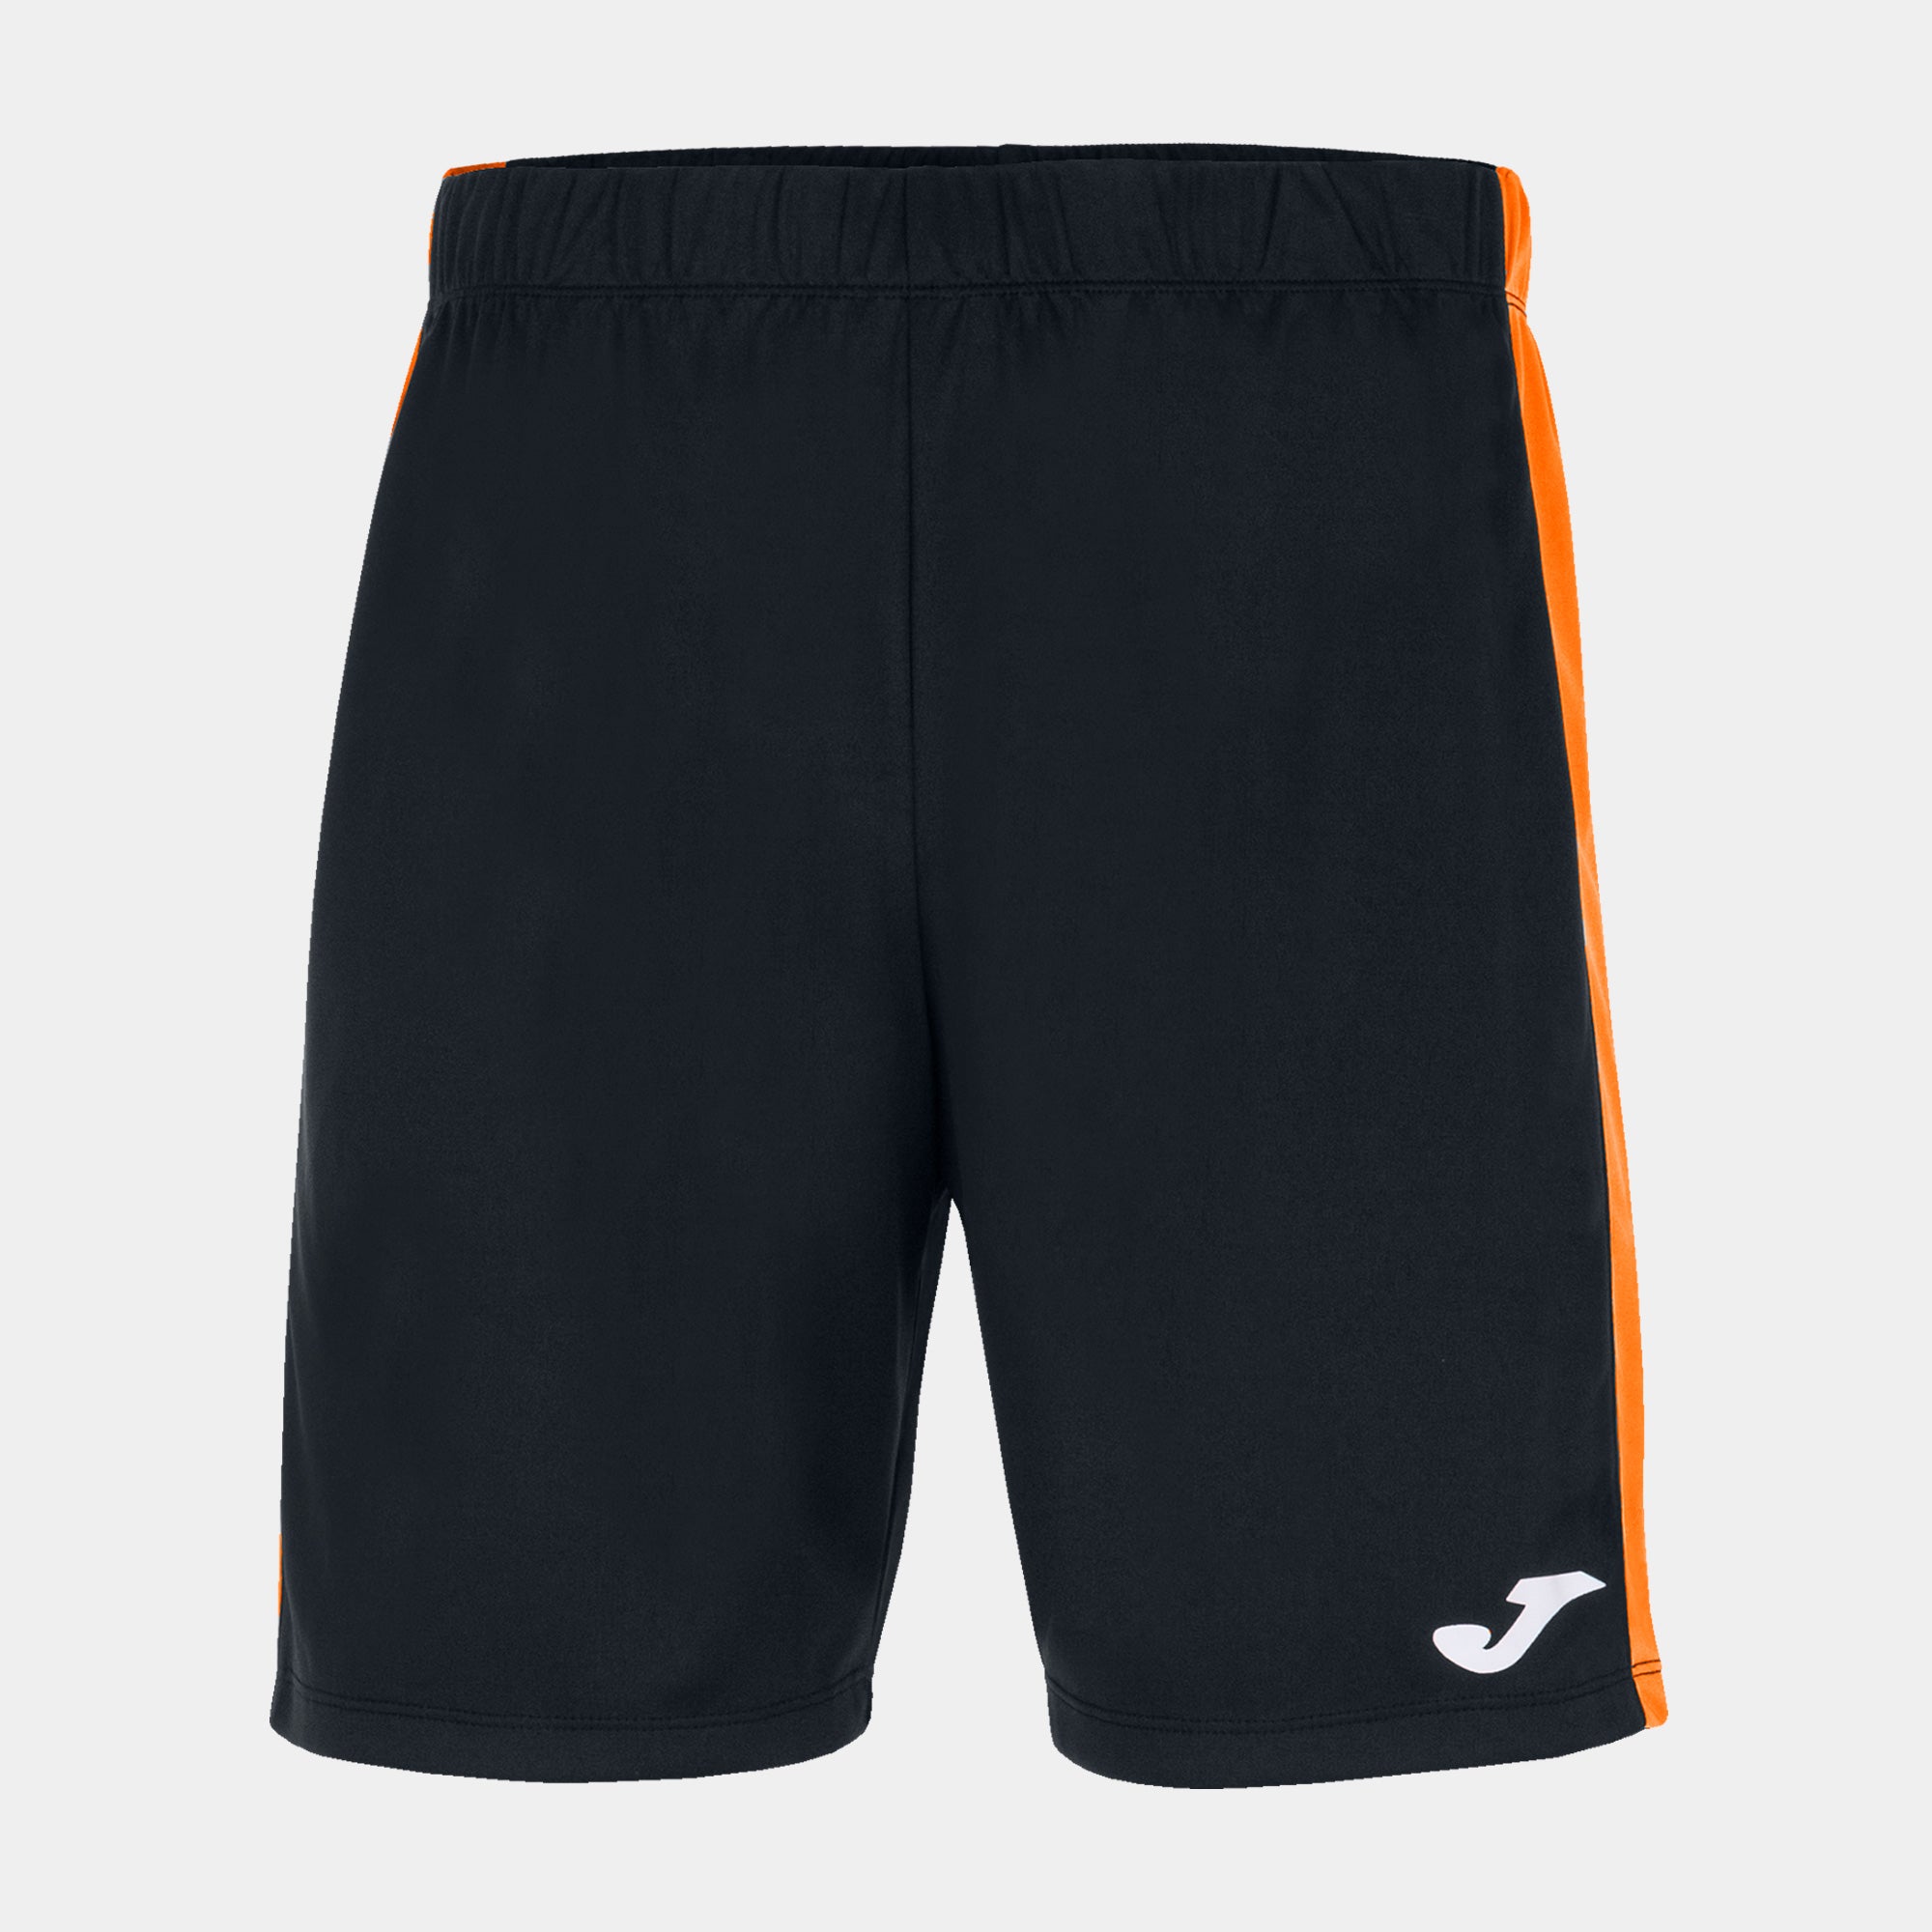 Joma Maxi Short - Black/Orange